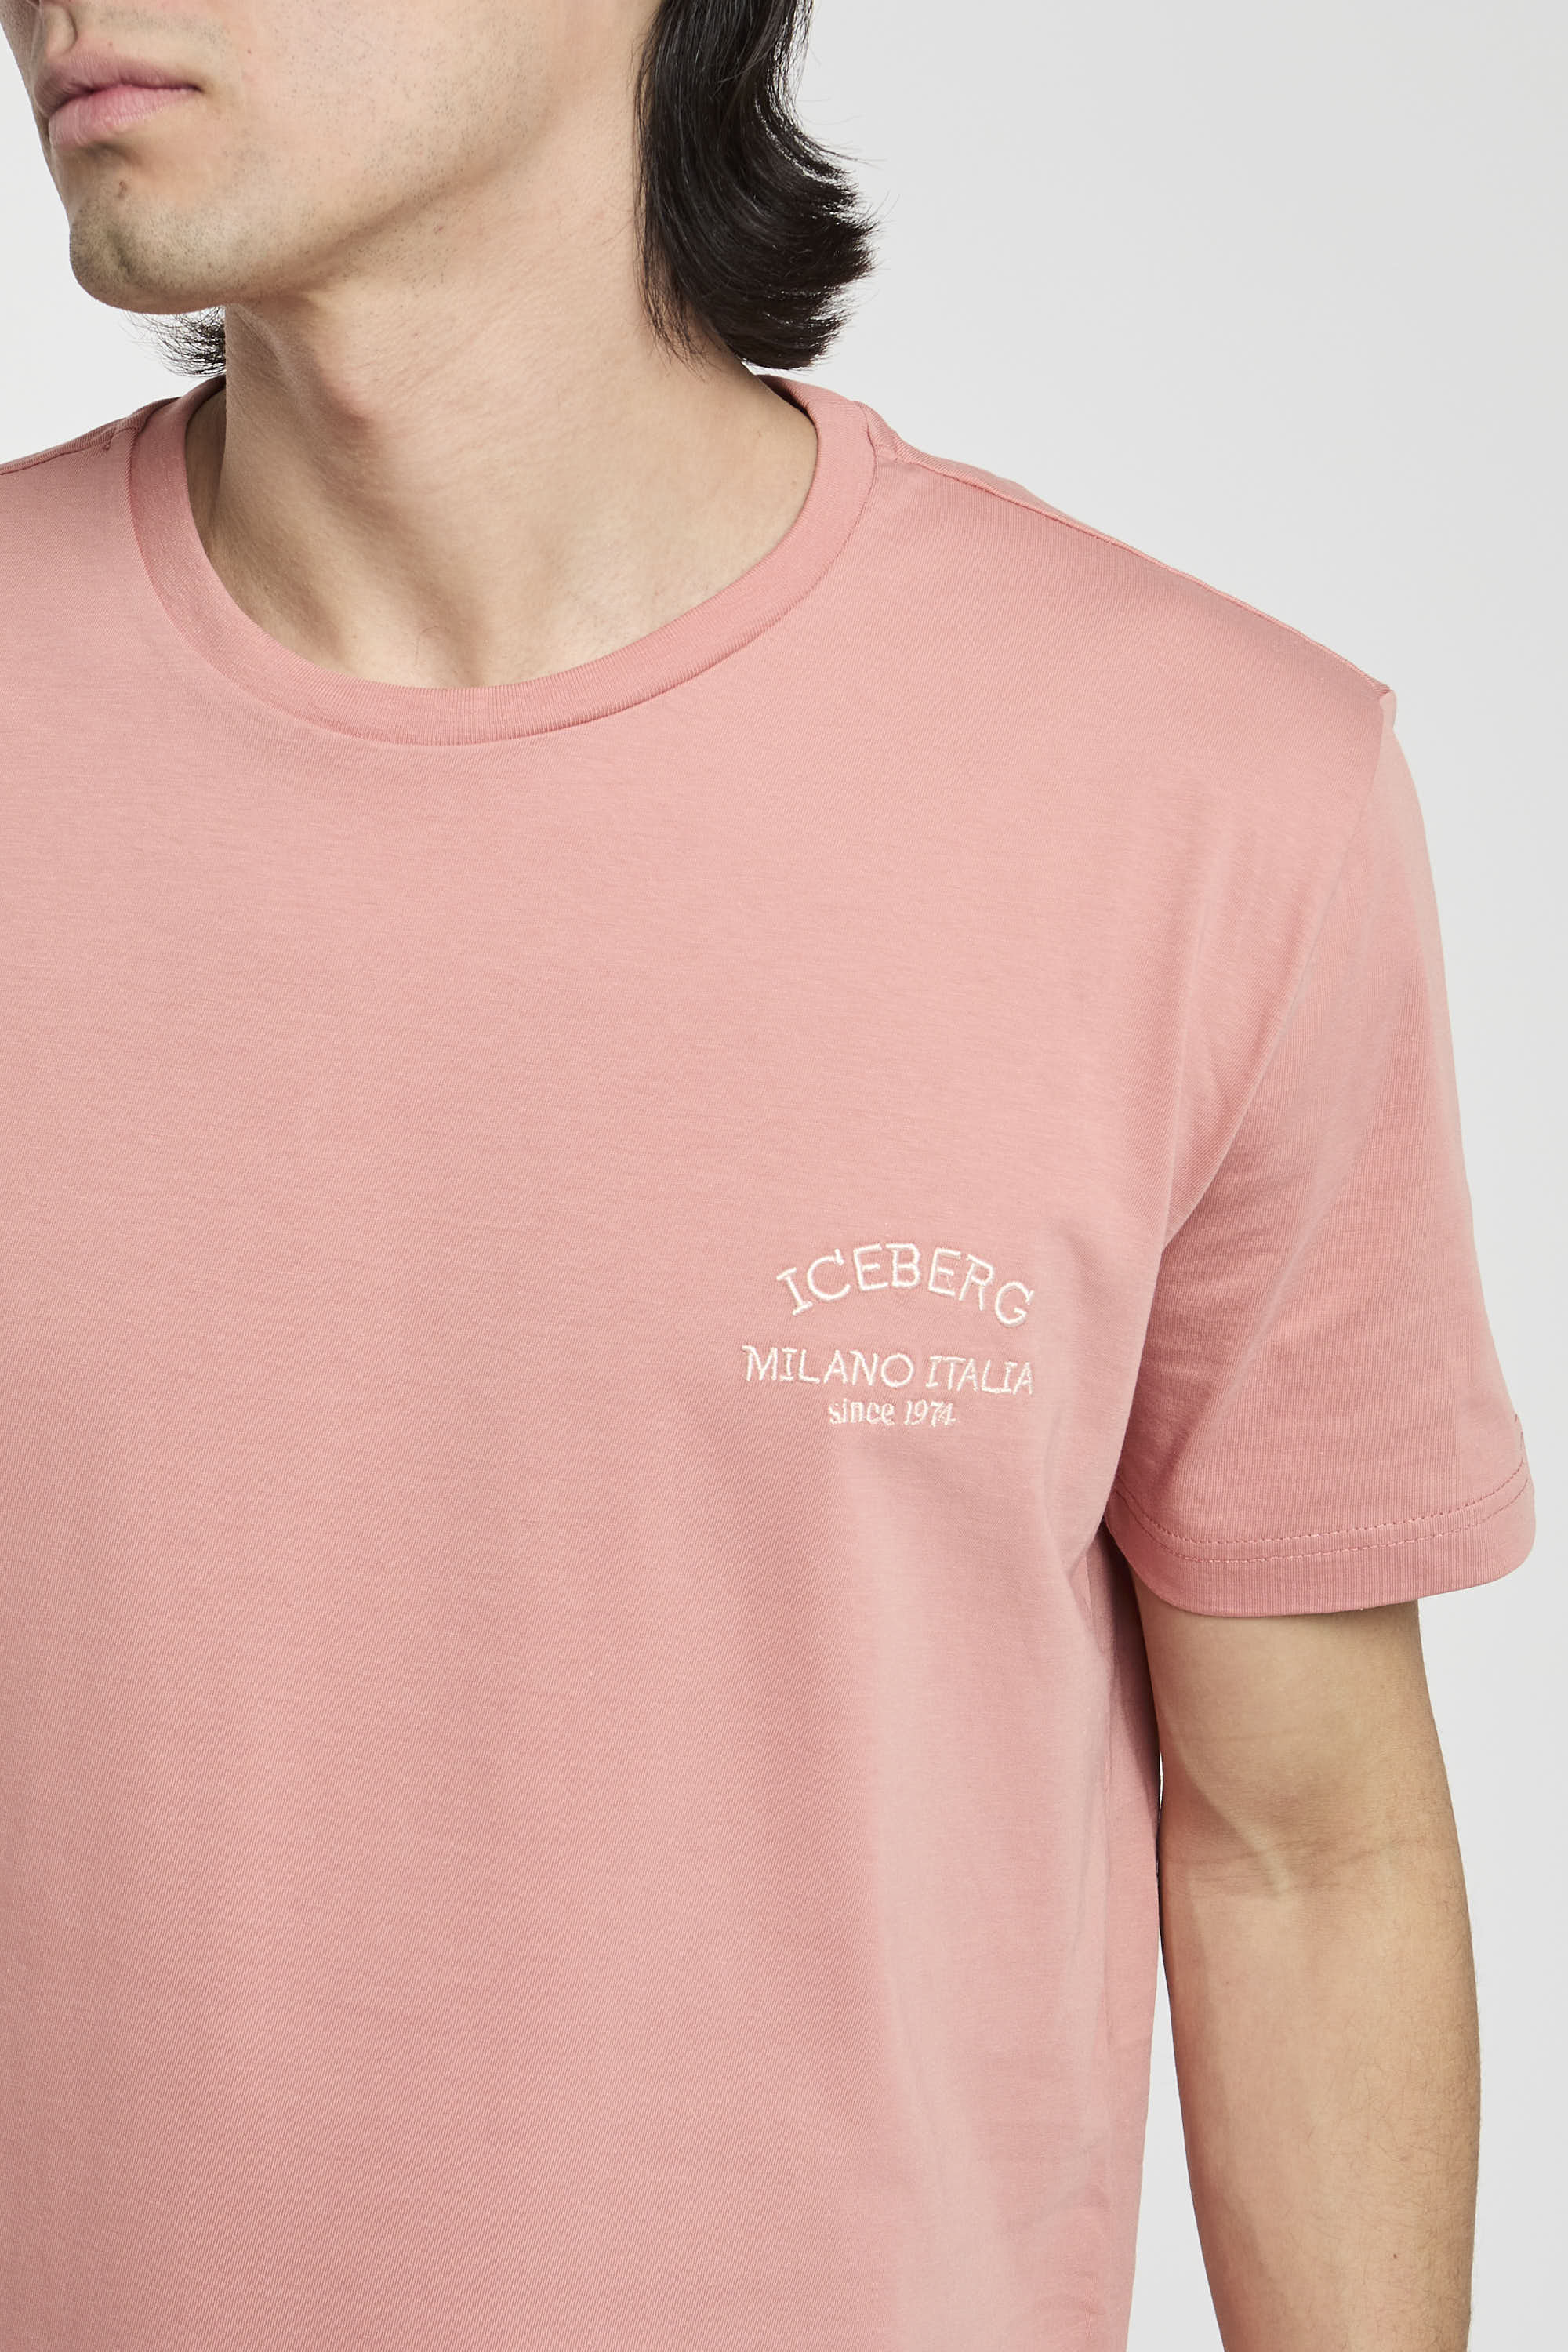 Iceberg T-Shirt Baumwolle Pink-1